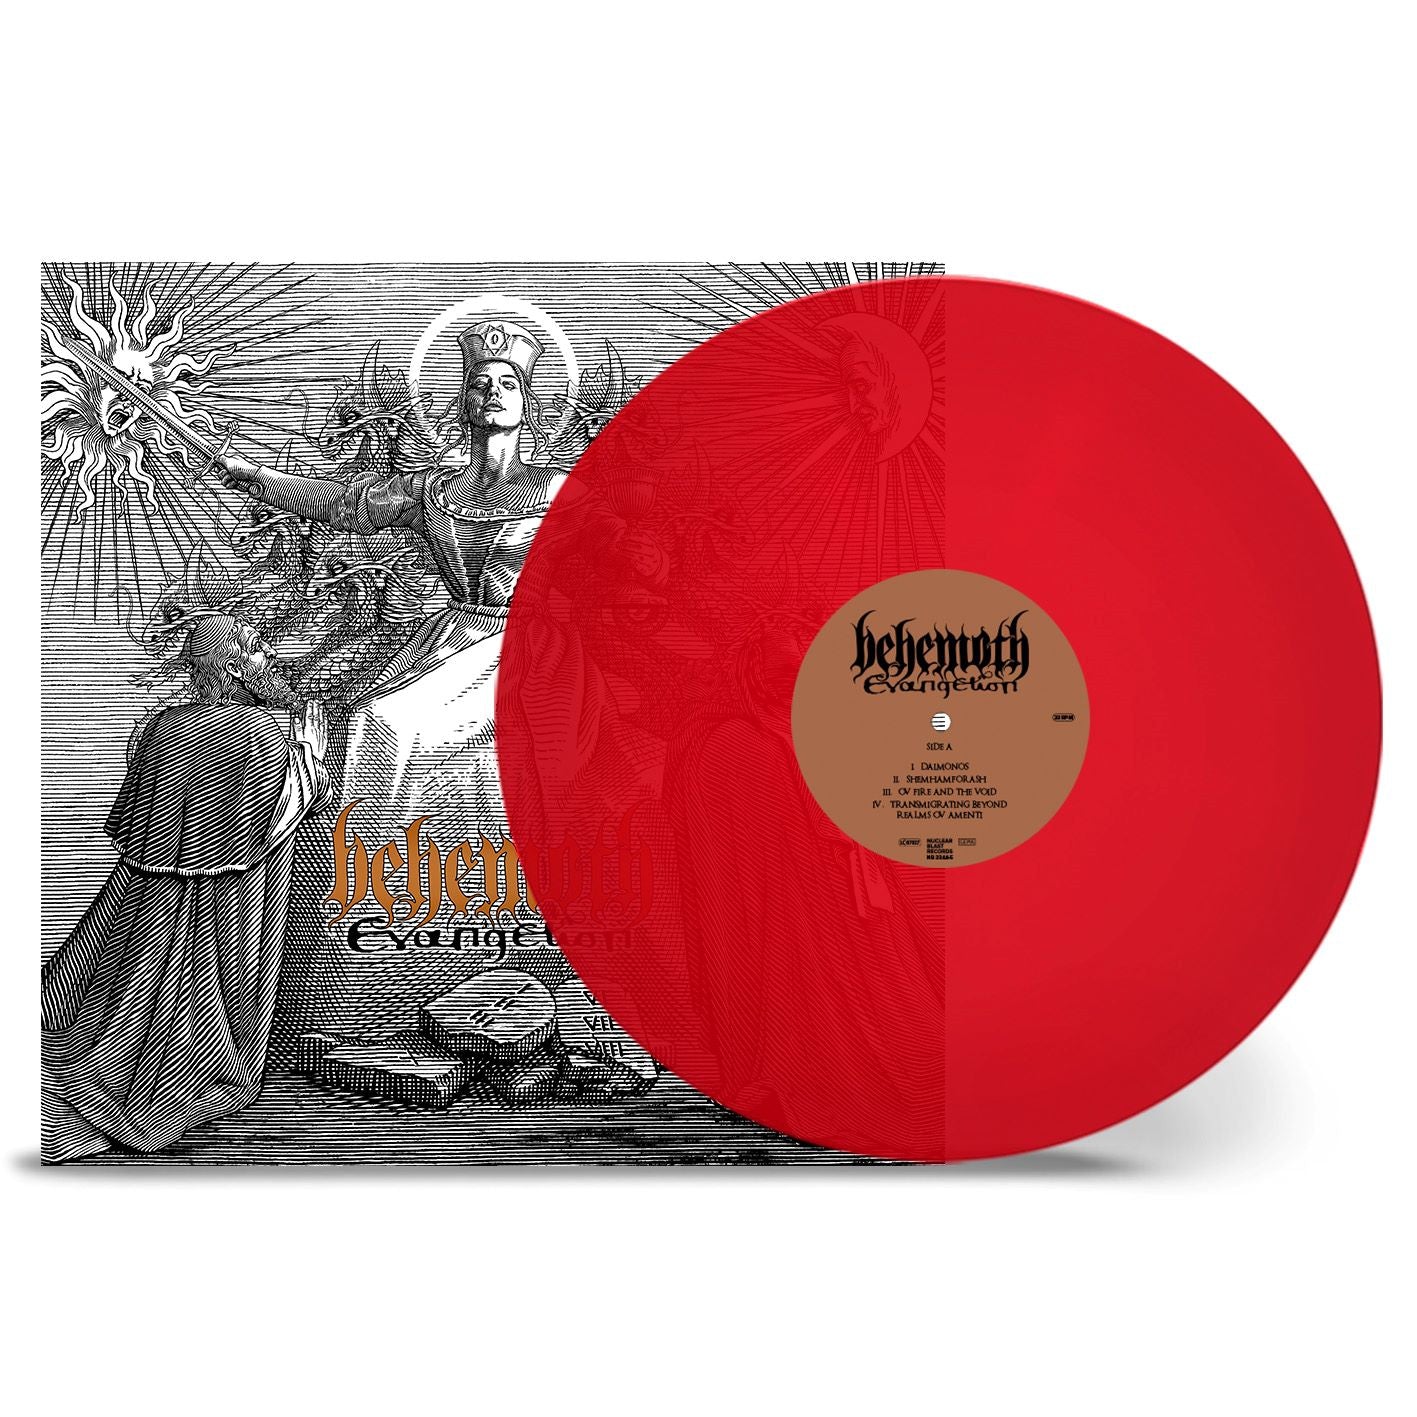 Behemoth "Evangelion" Red Vinyl